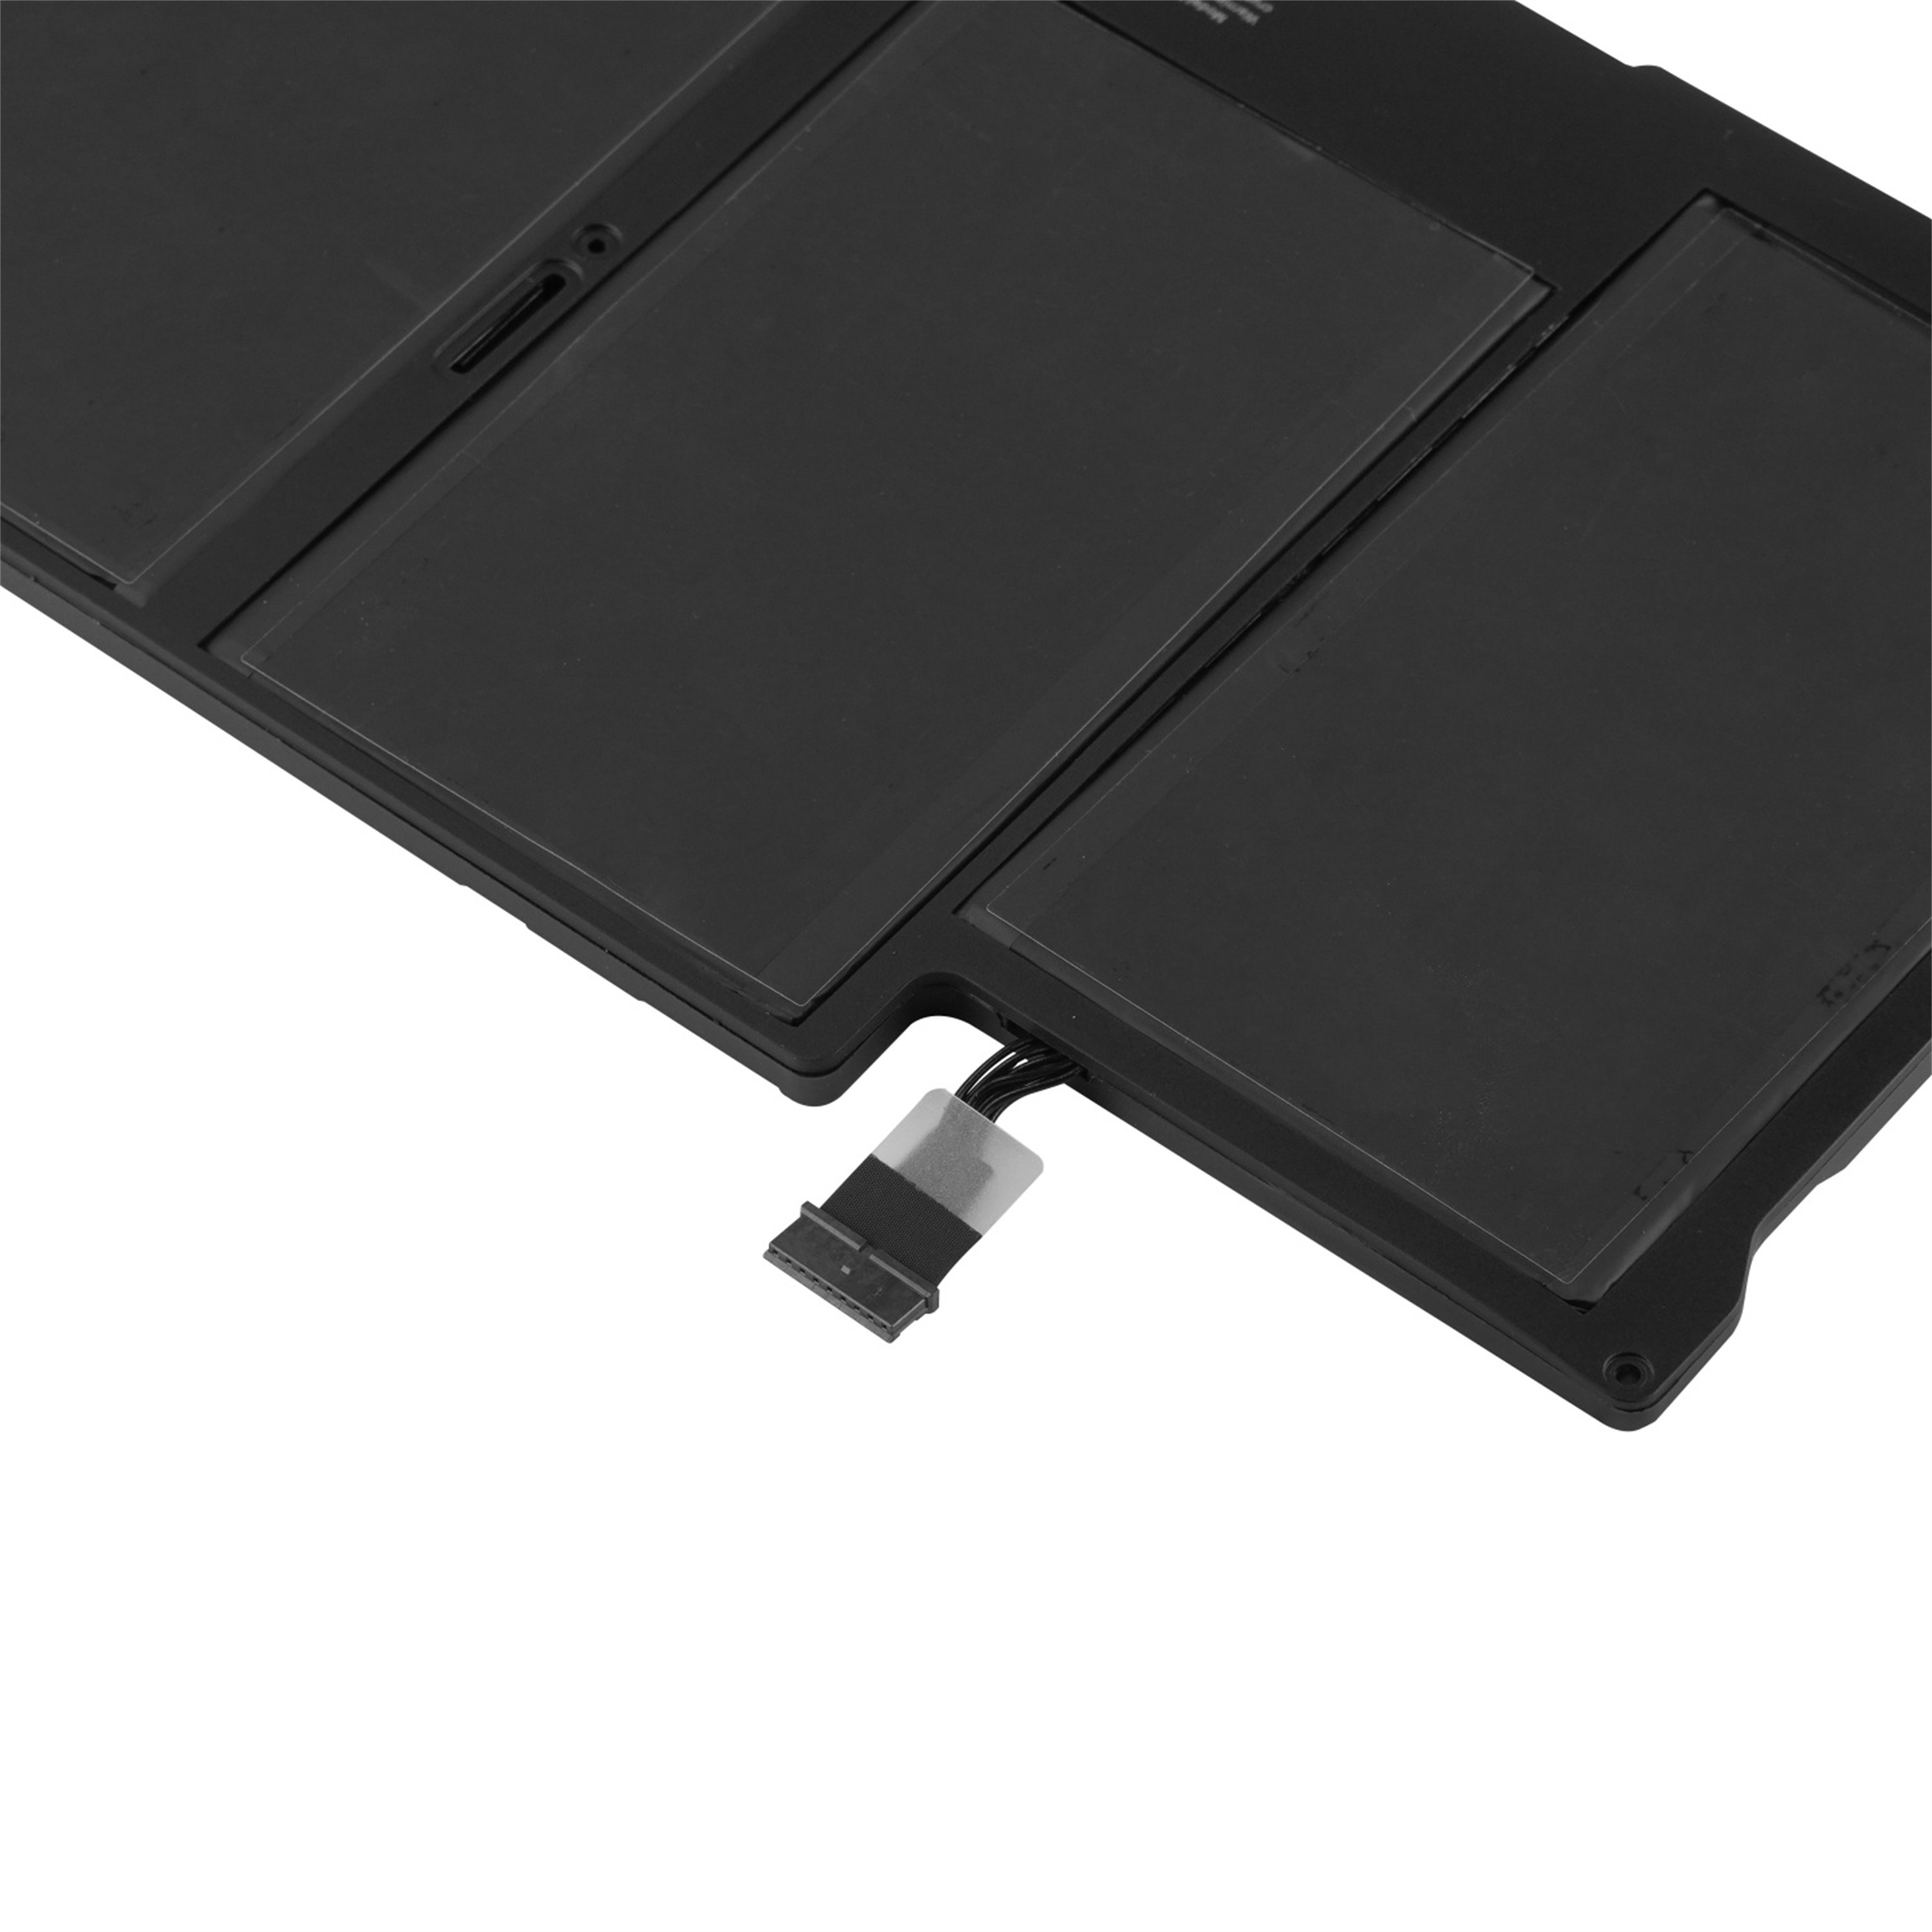 Best Seller OEM Manufacturer laptop battery lithium ion batteries A1405 for APPLE MacBook Air A1369 A1466 a1496 7.62 cm